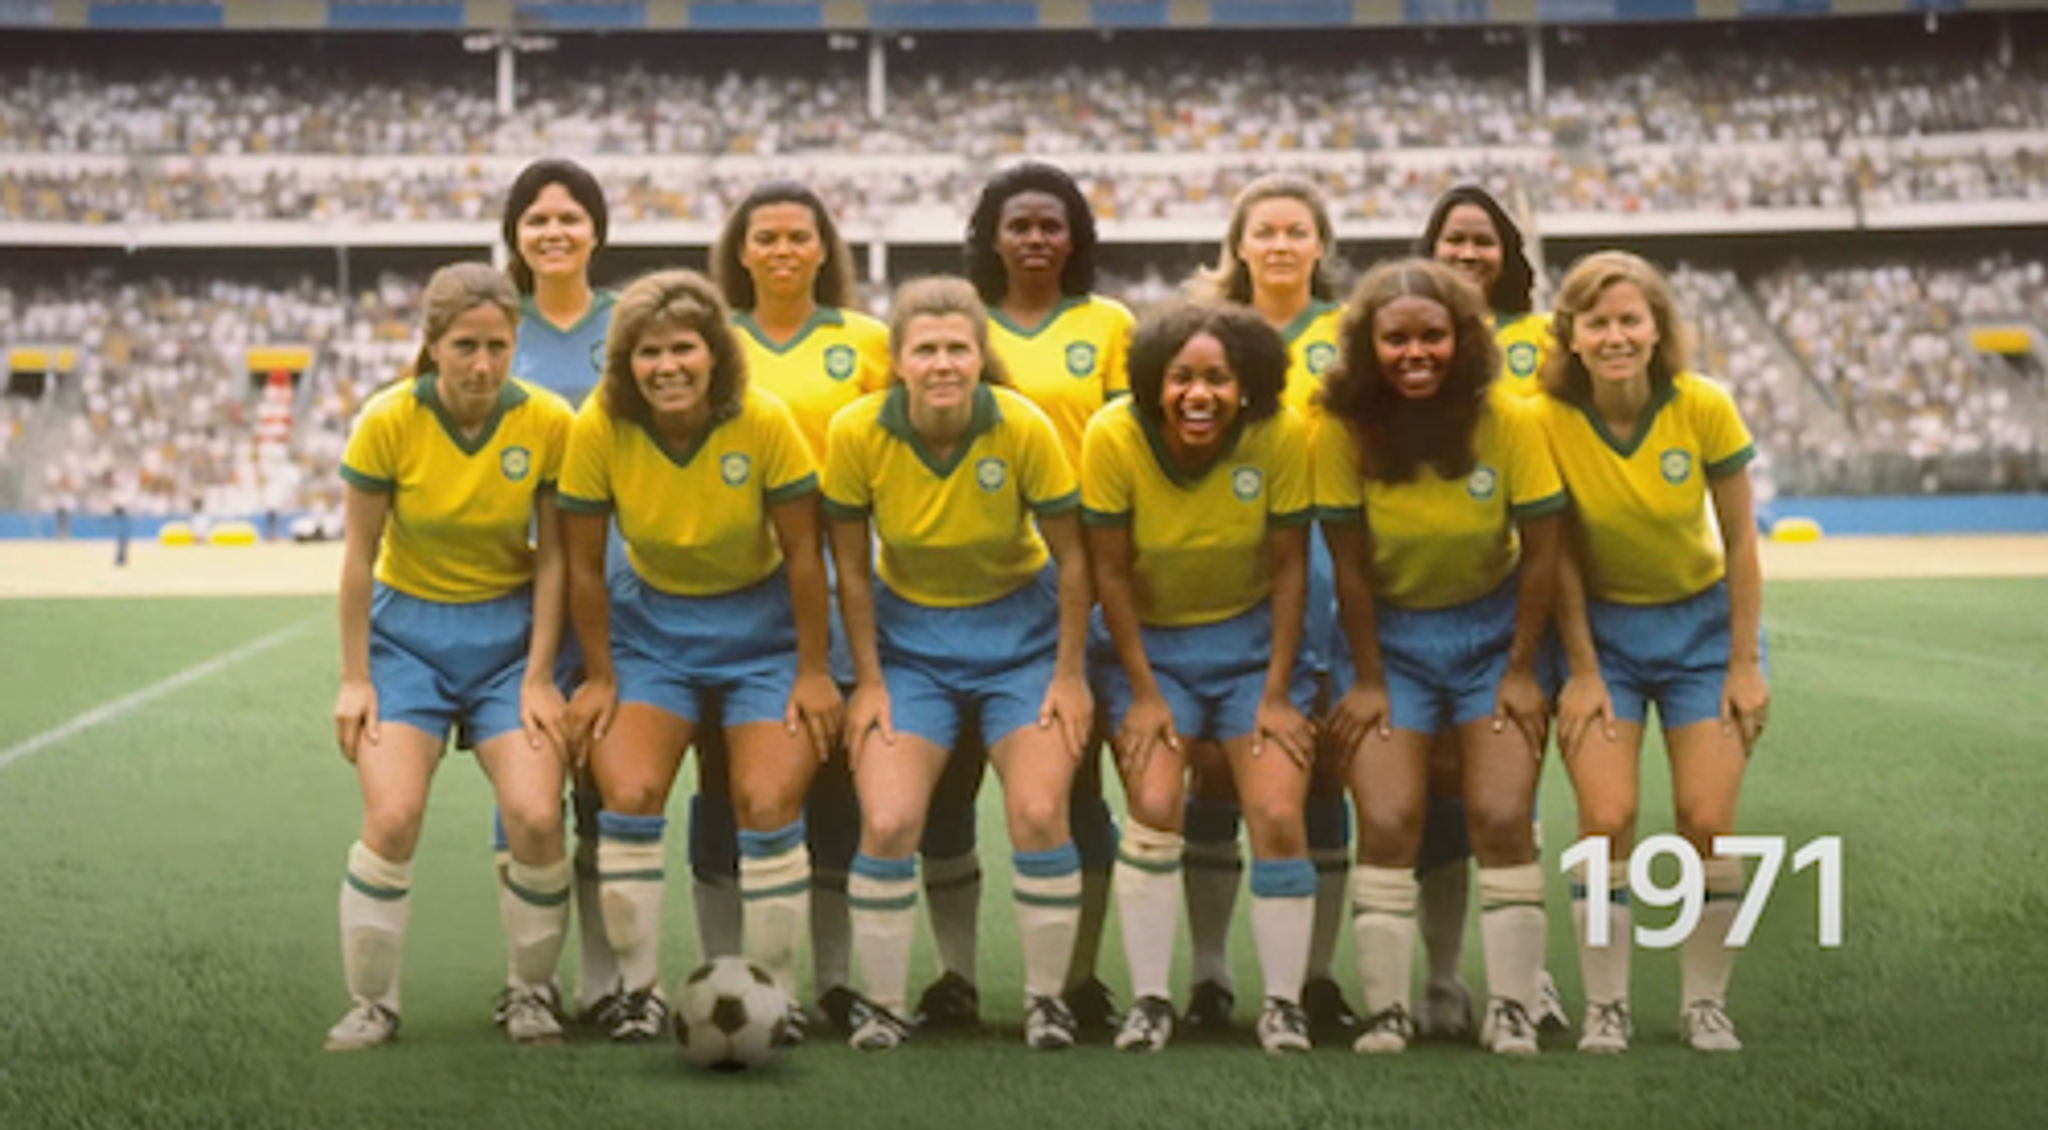 AI envisions a women's World Cup team that didn't exist